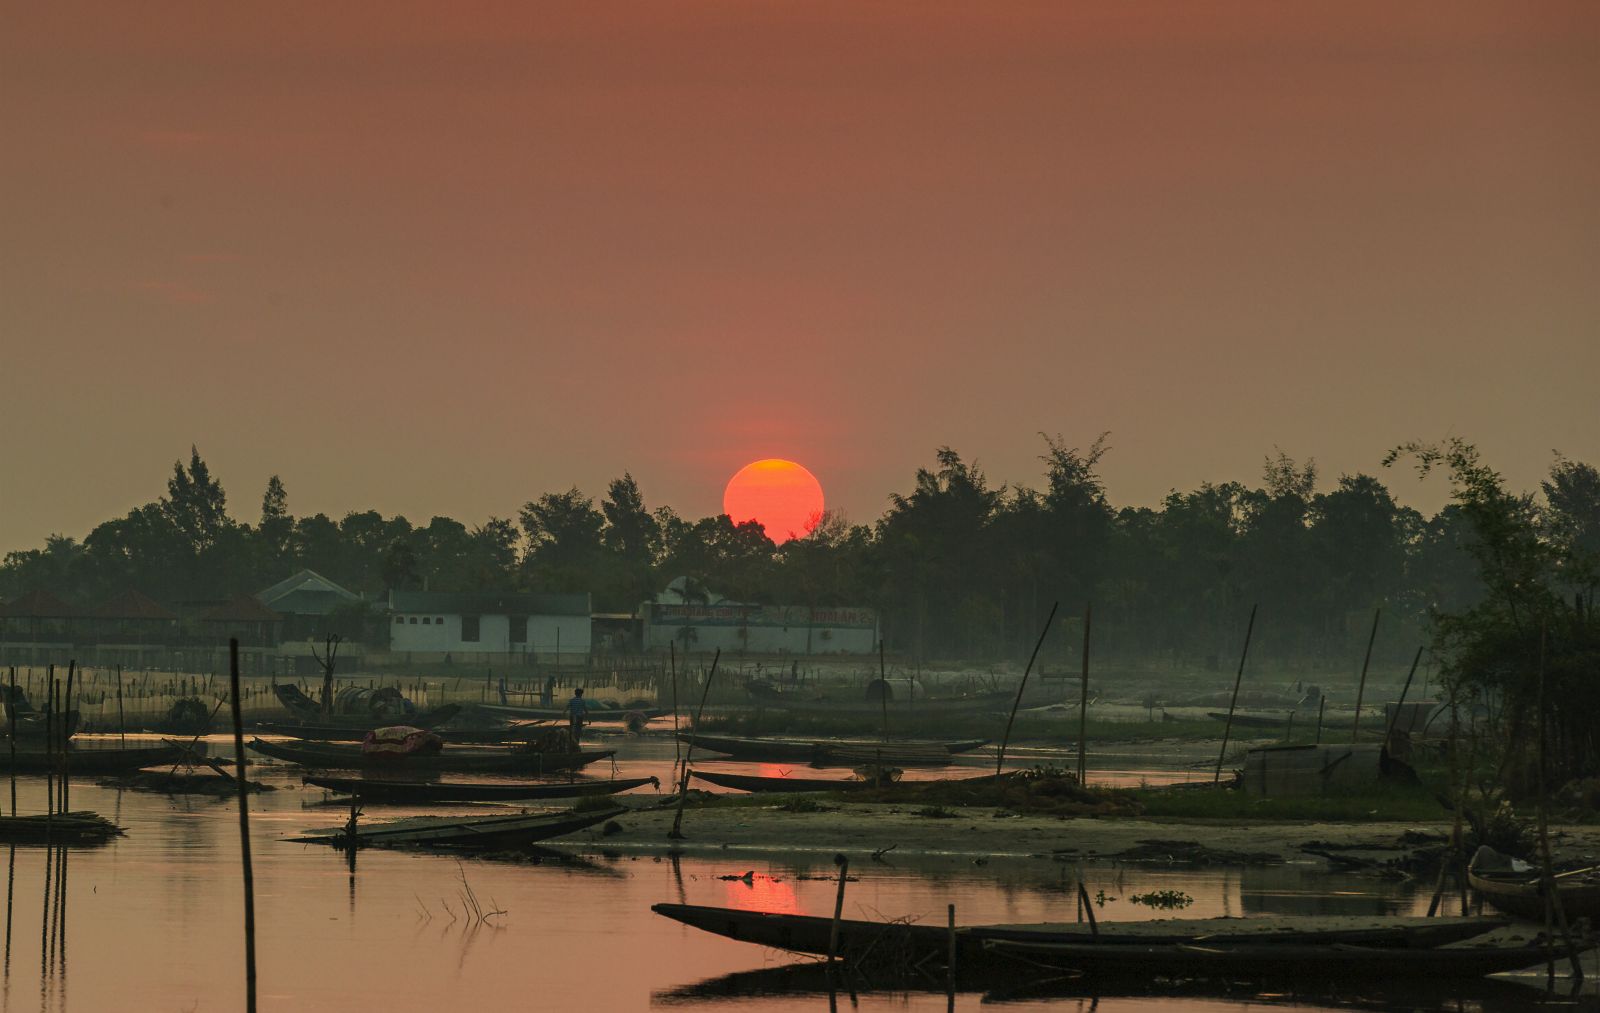 The sun rises over the lagoon